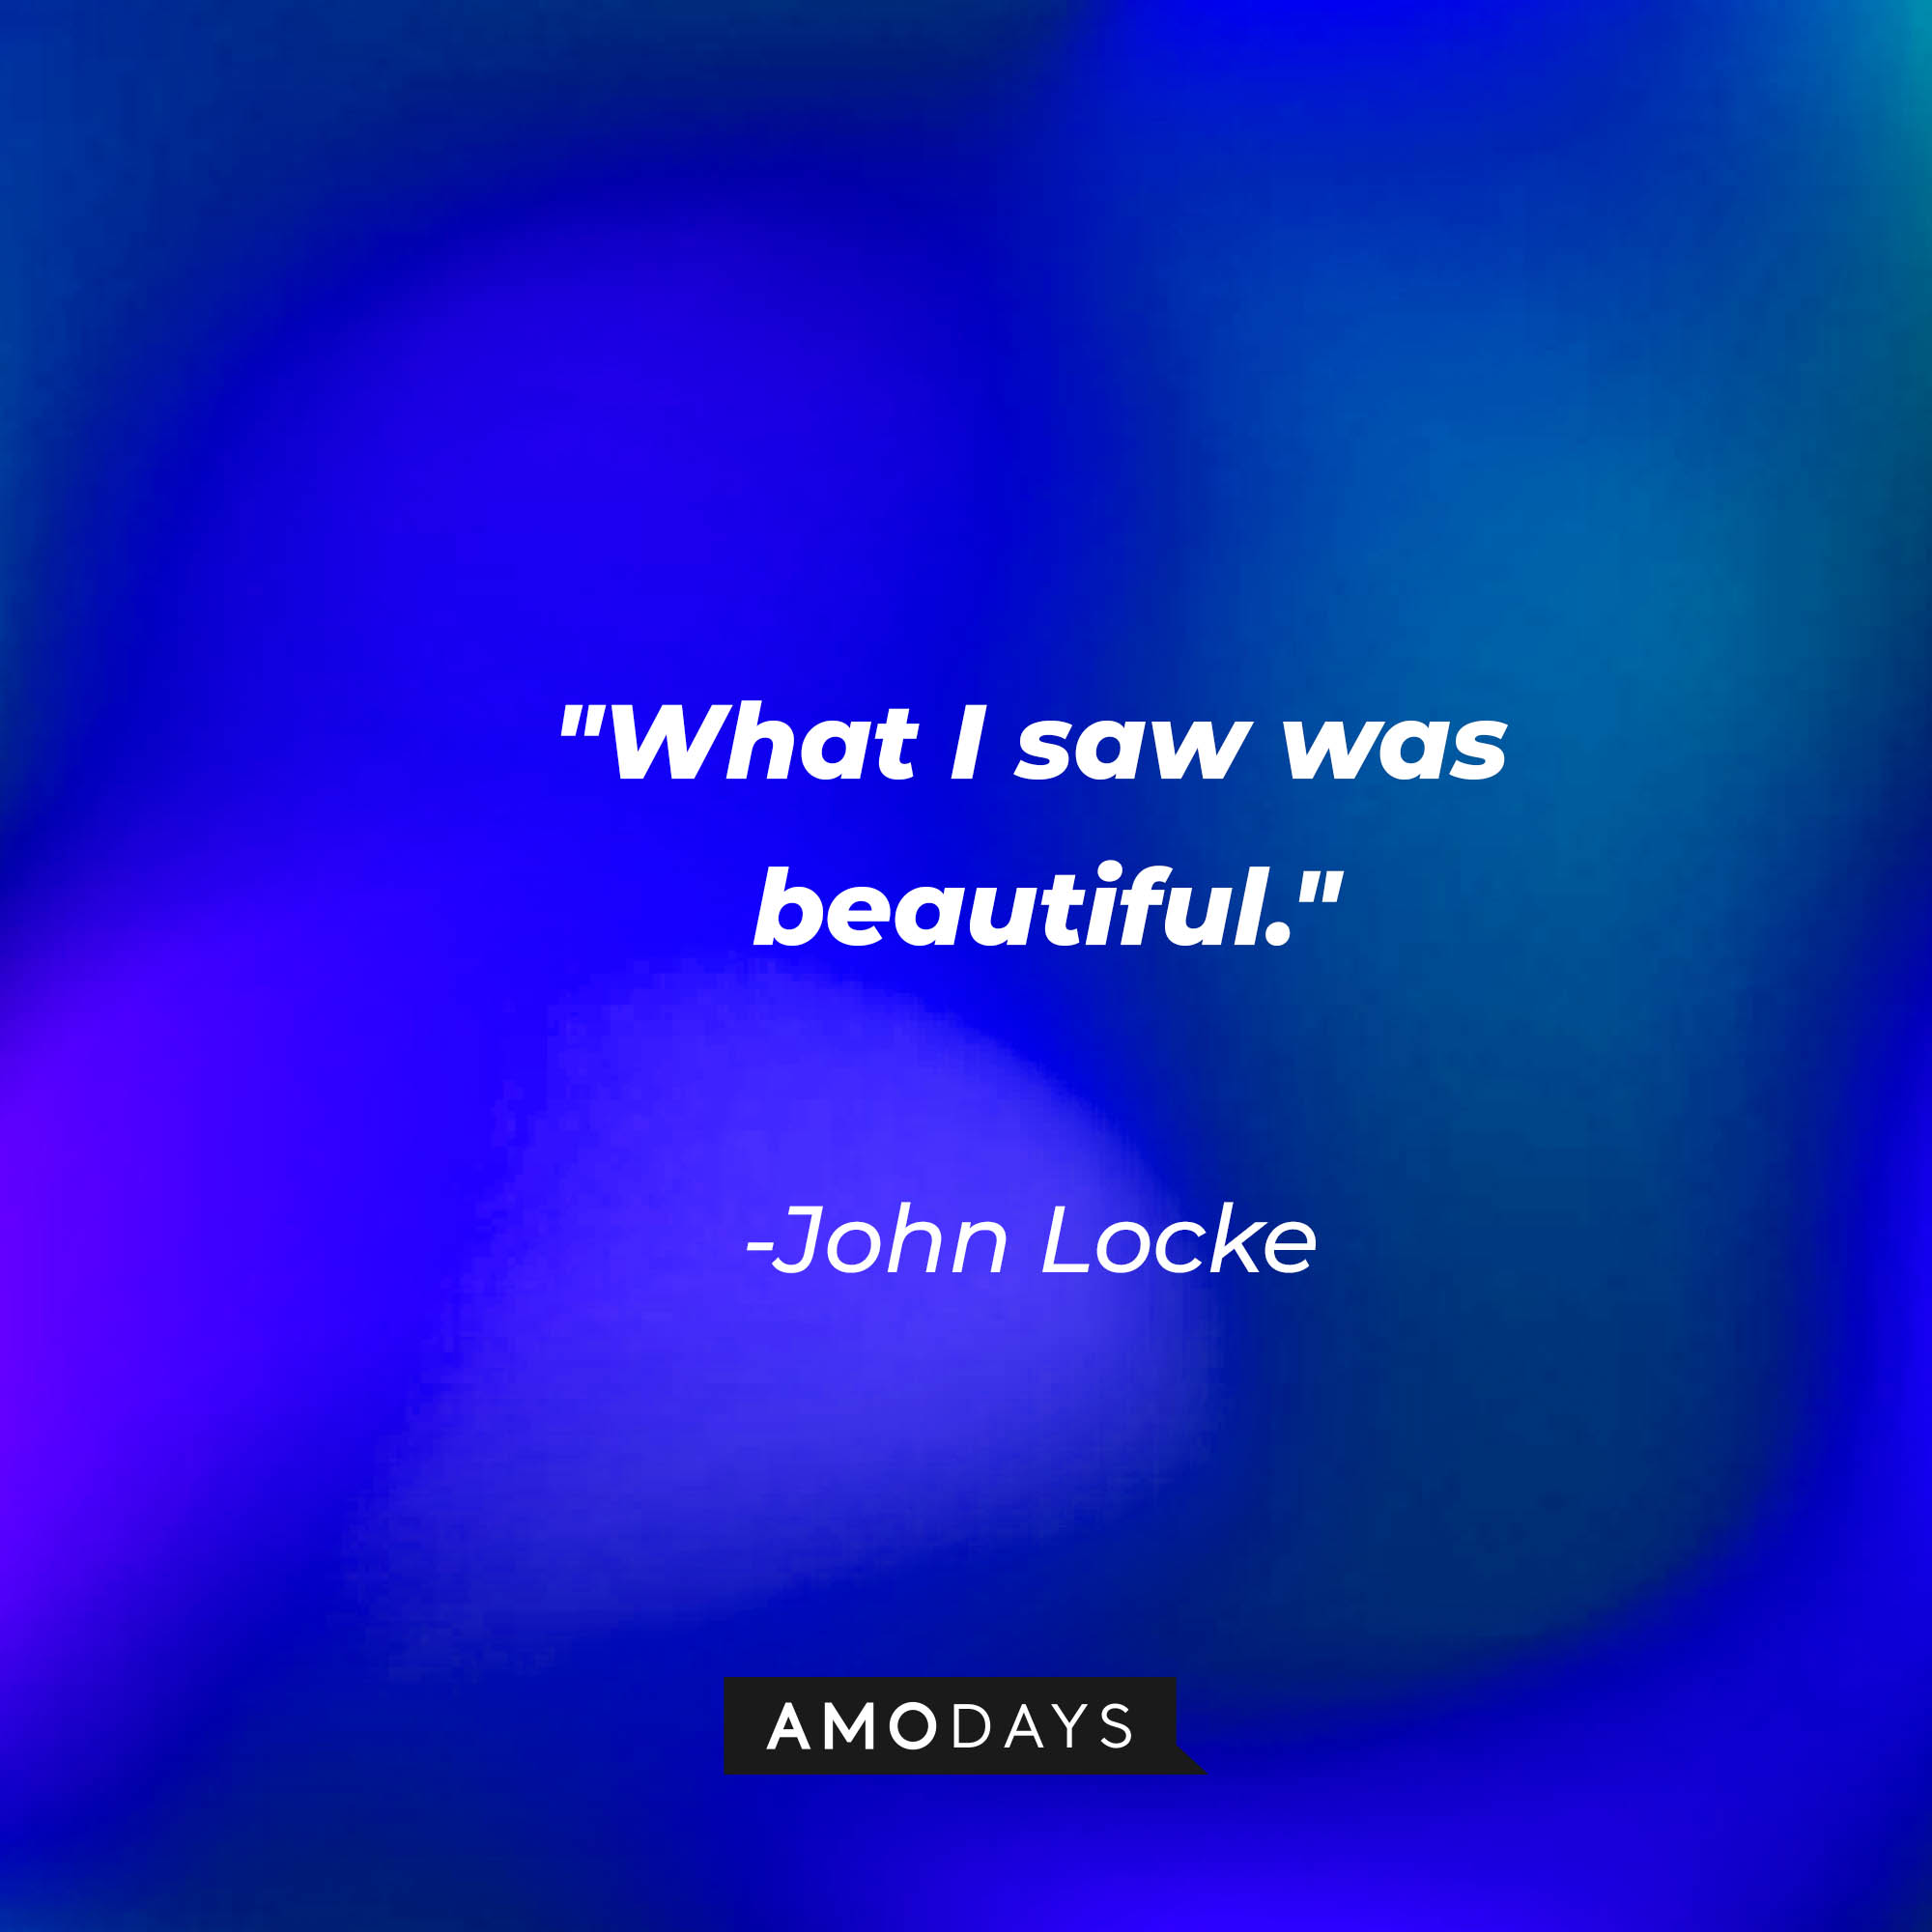 John Locke's quote: "What I saw was beautiful." | Source: AmoDays